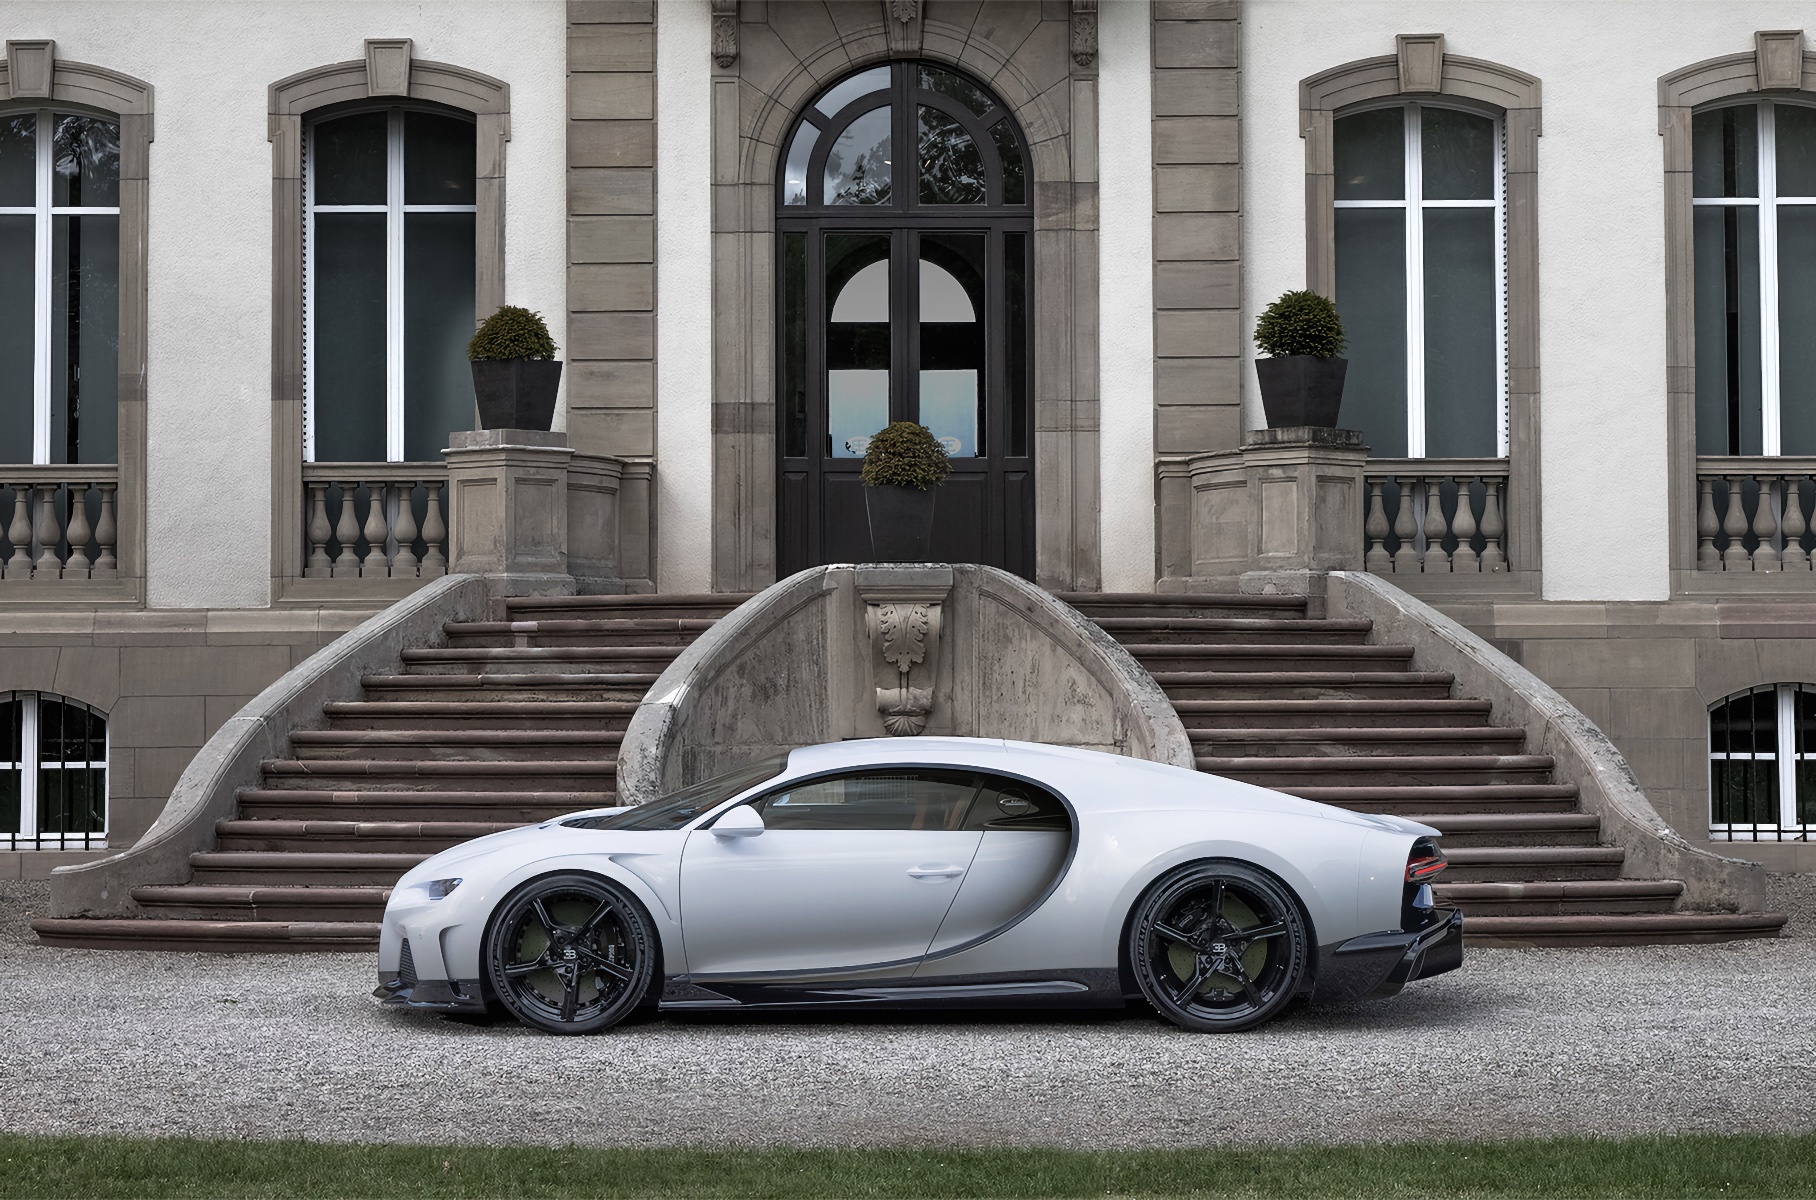 Bugatti представила новый гиперкар Chiron Super Sport